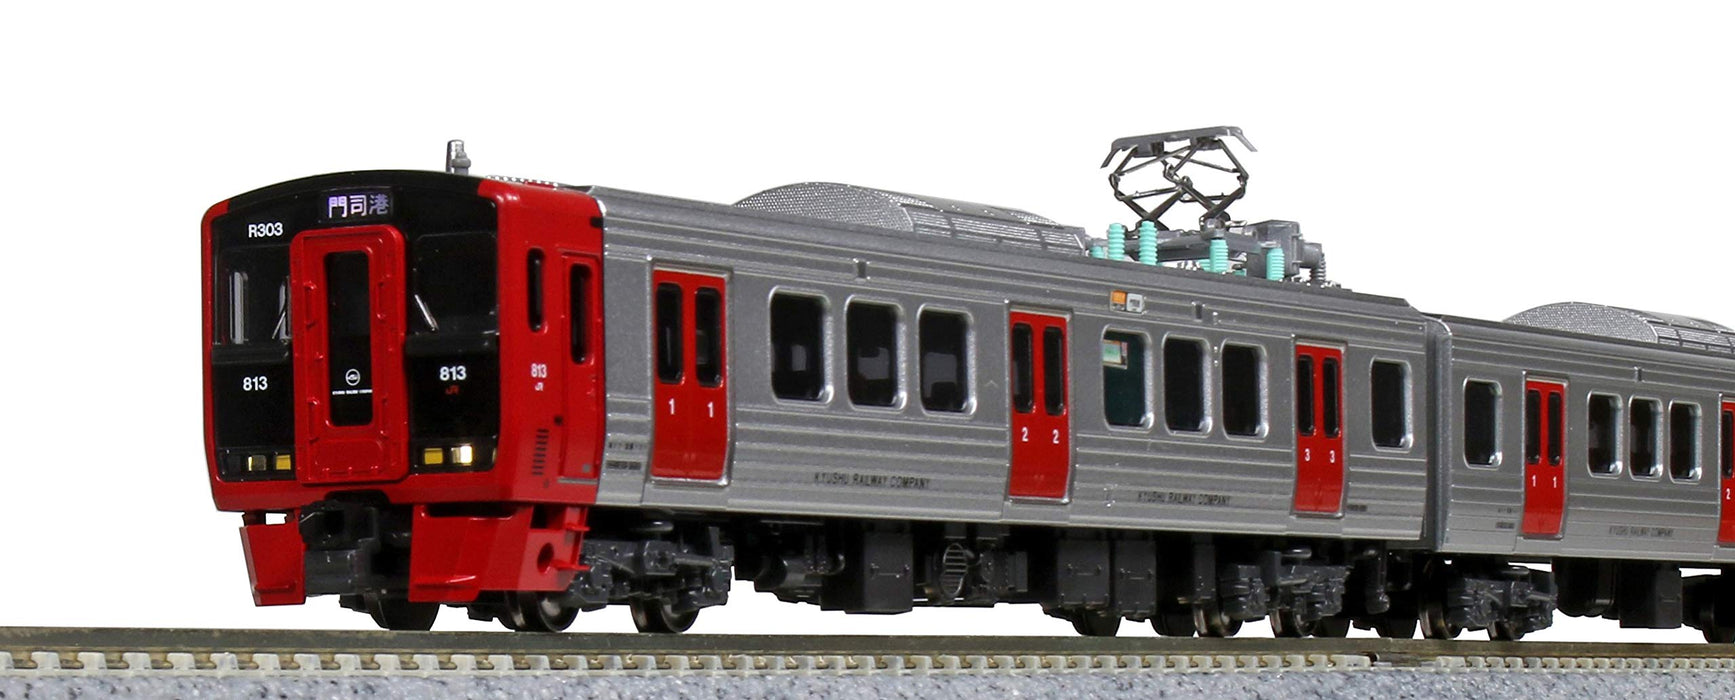 Kato Spur N 813 Serie 6-Wagen-Set Modelleisenbahn Sonderprojekt Produkt 10-1689